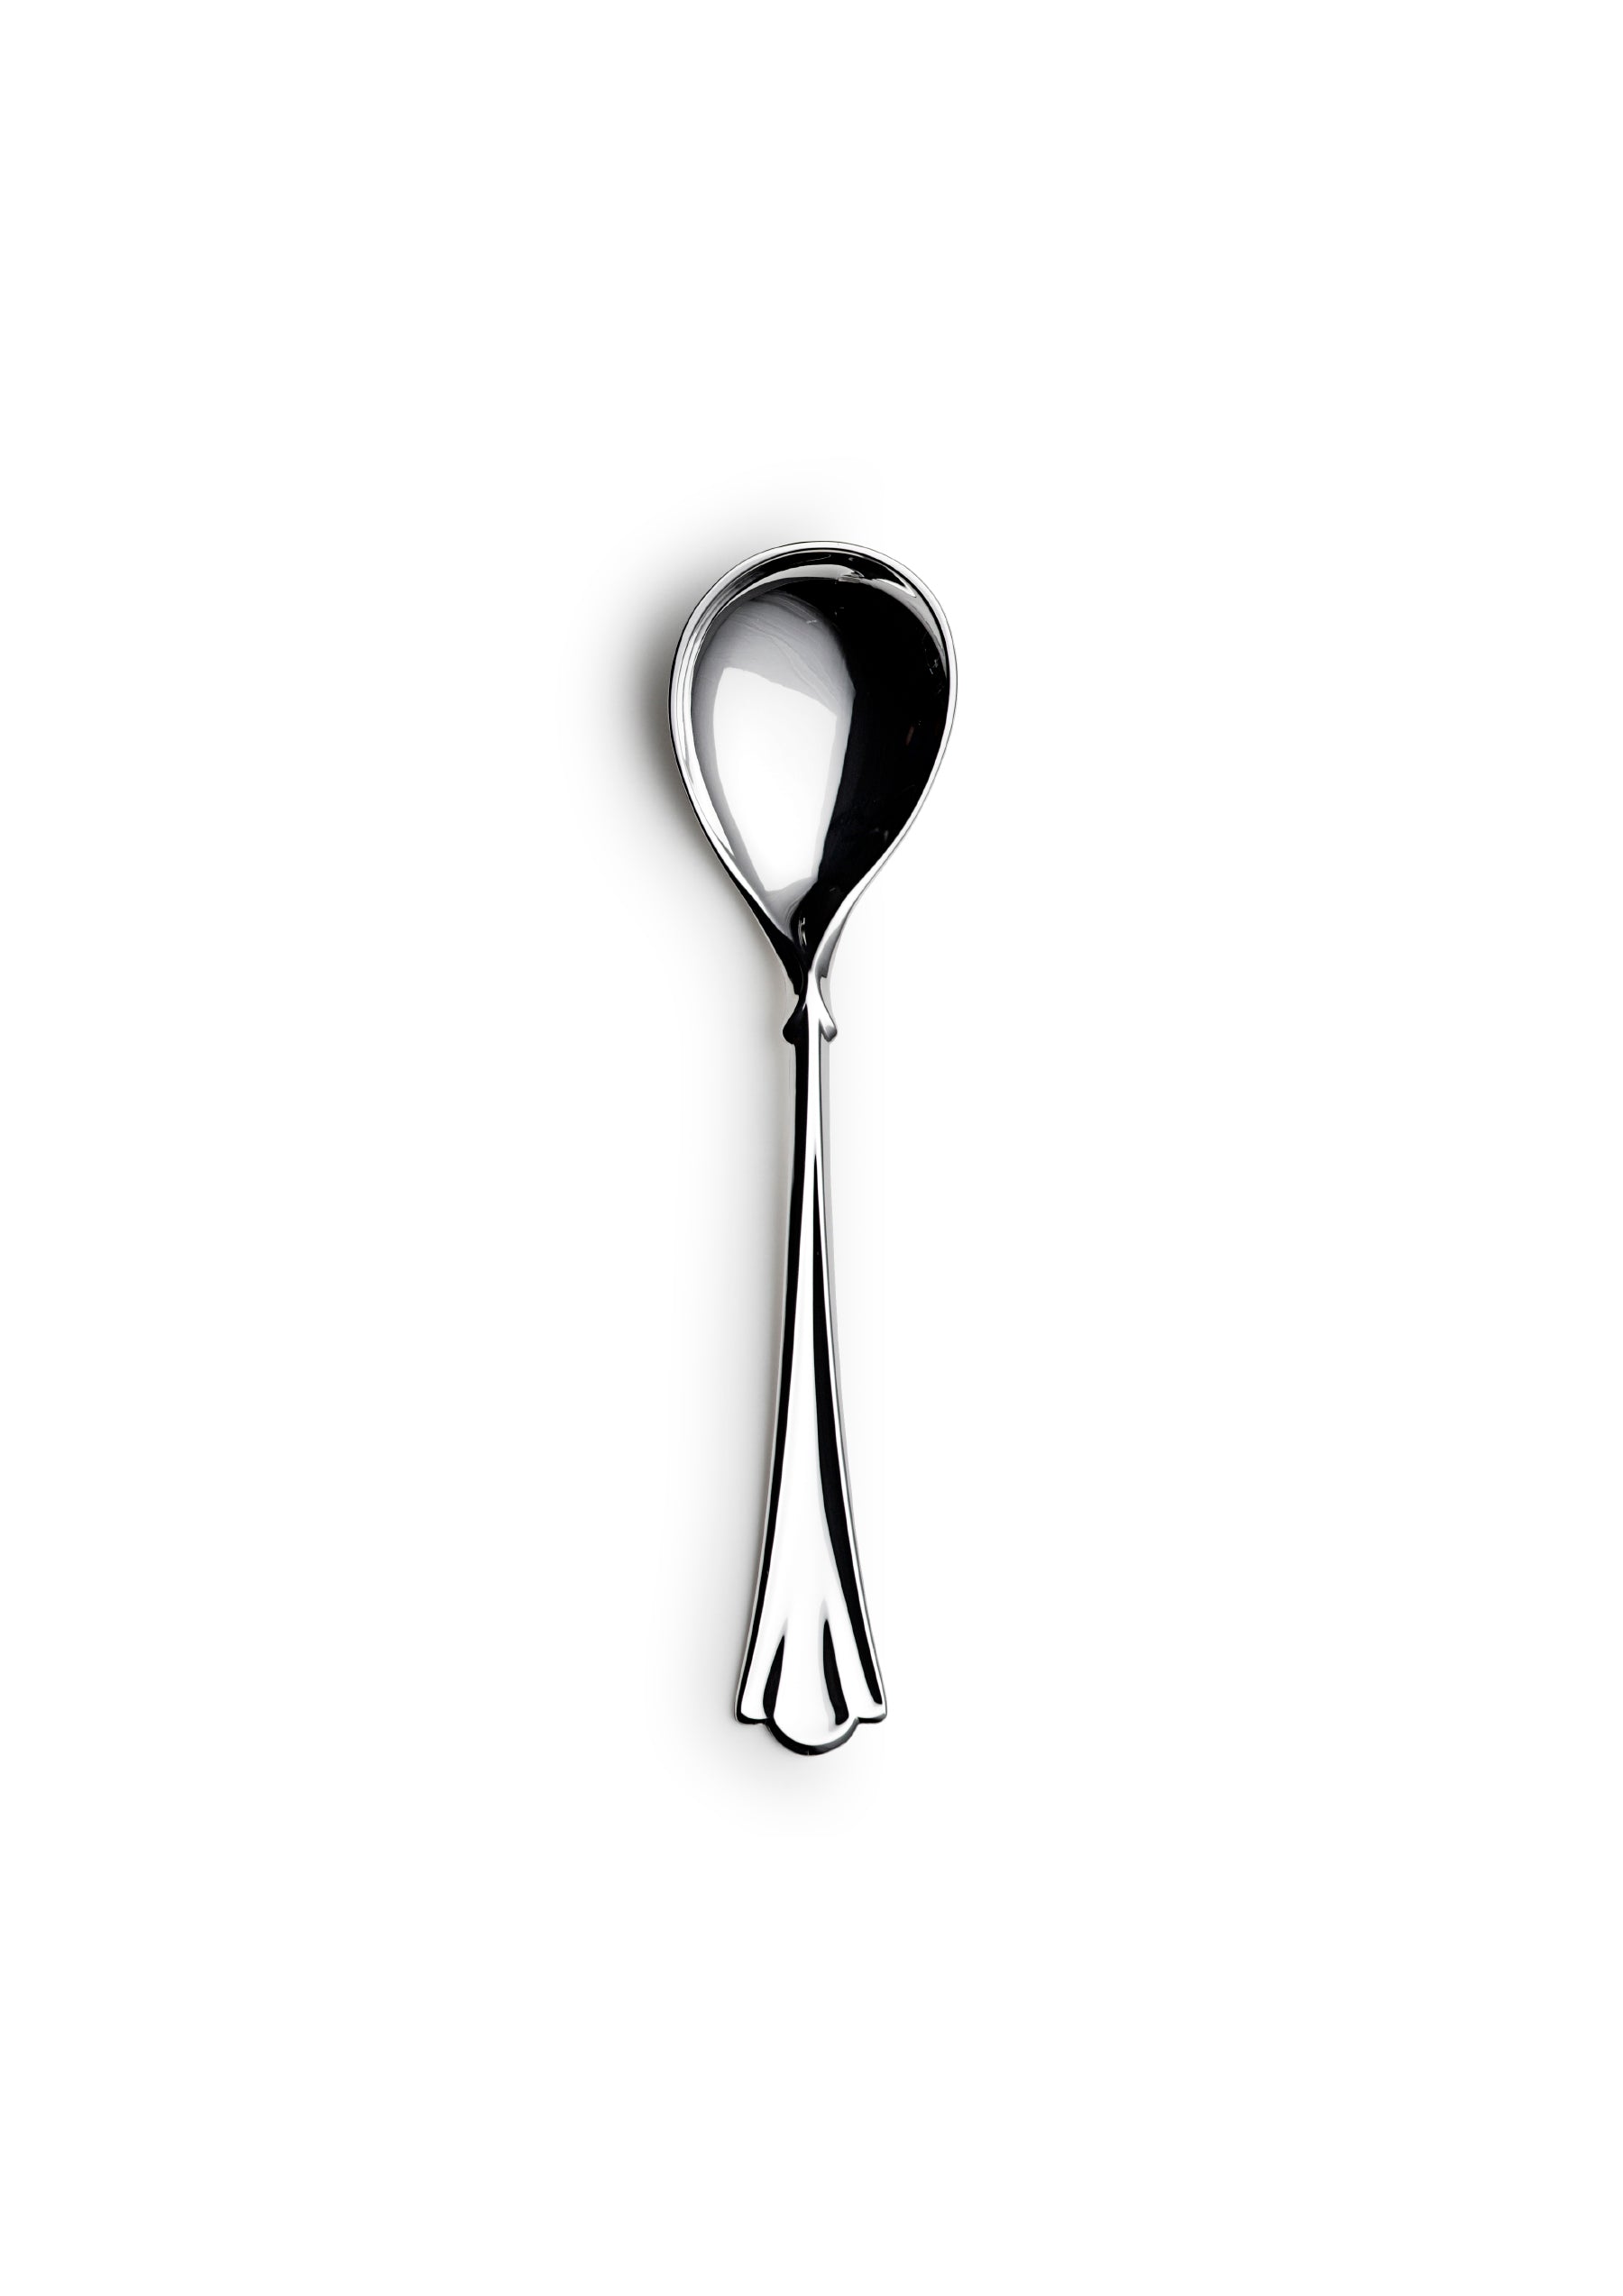 Lily jam spoon 